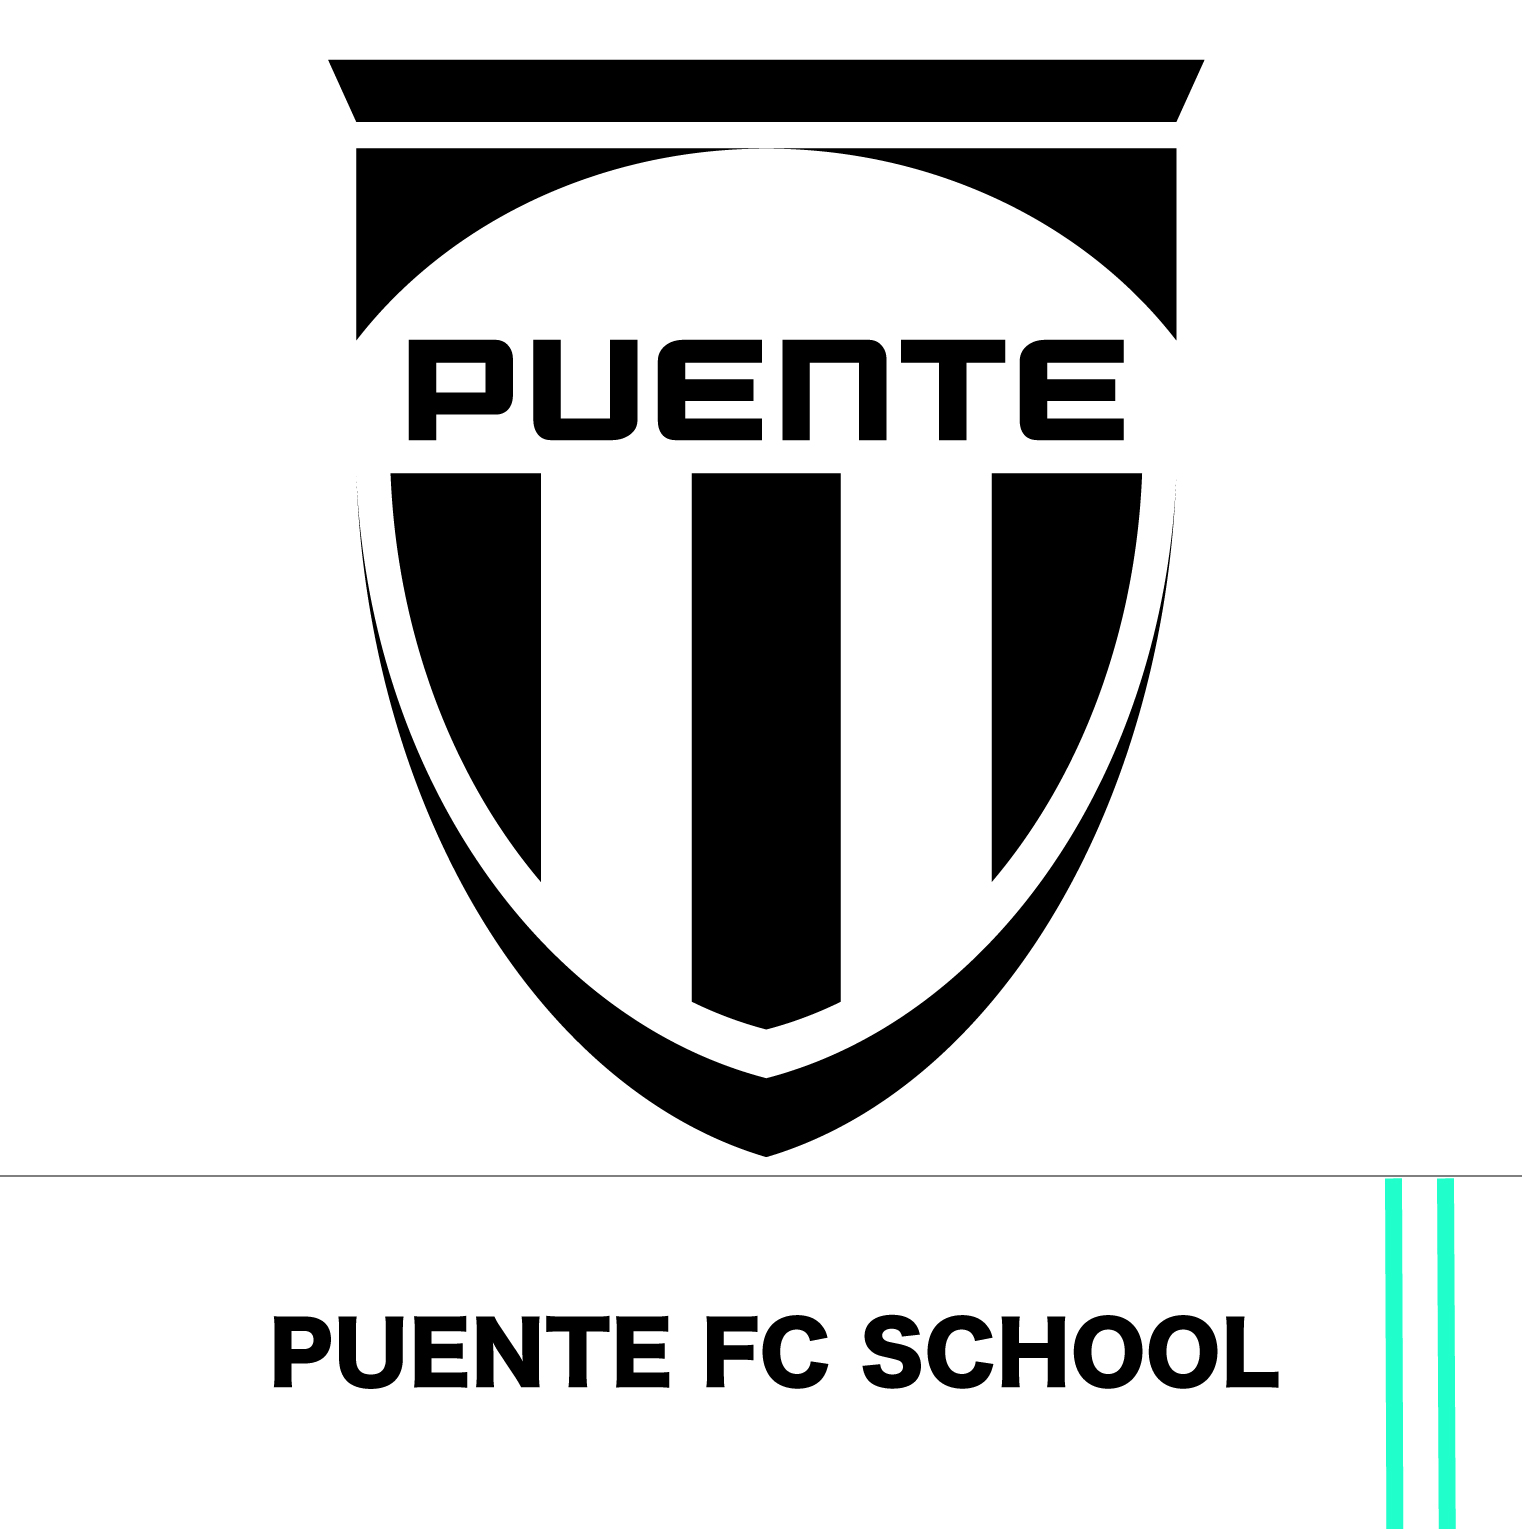 PUENTE FC